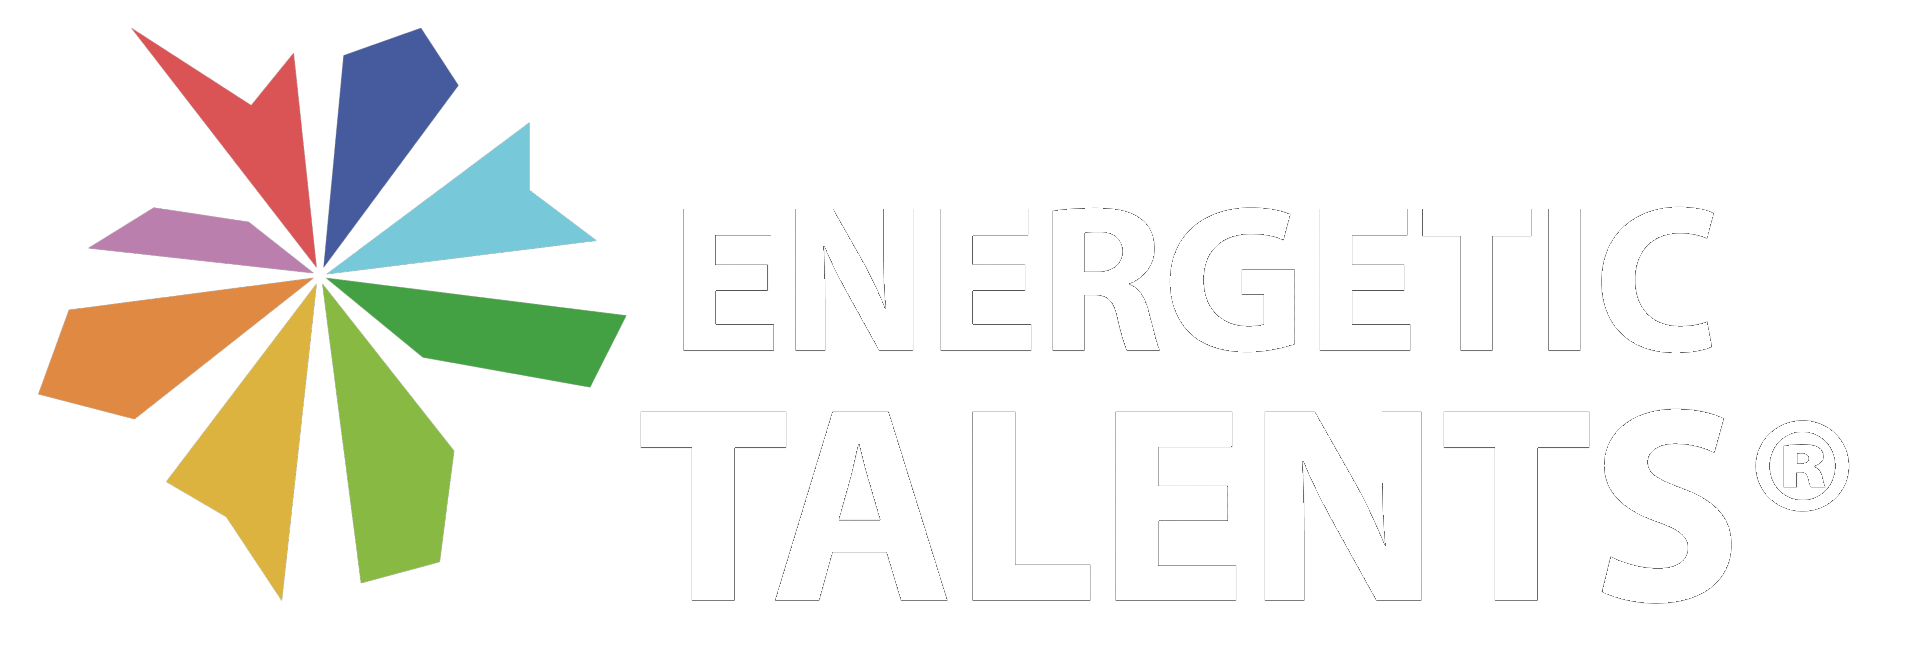 Energetic talents